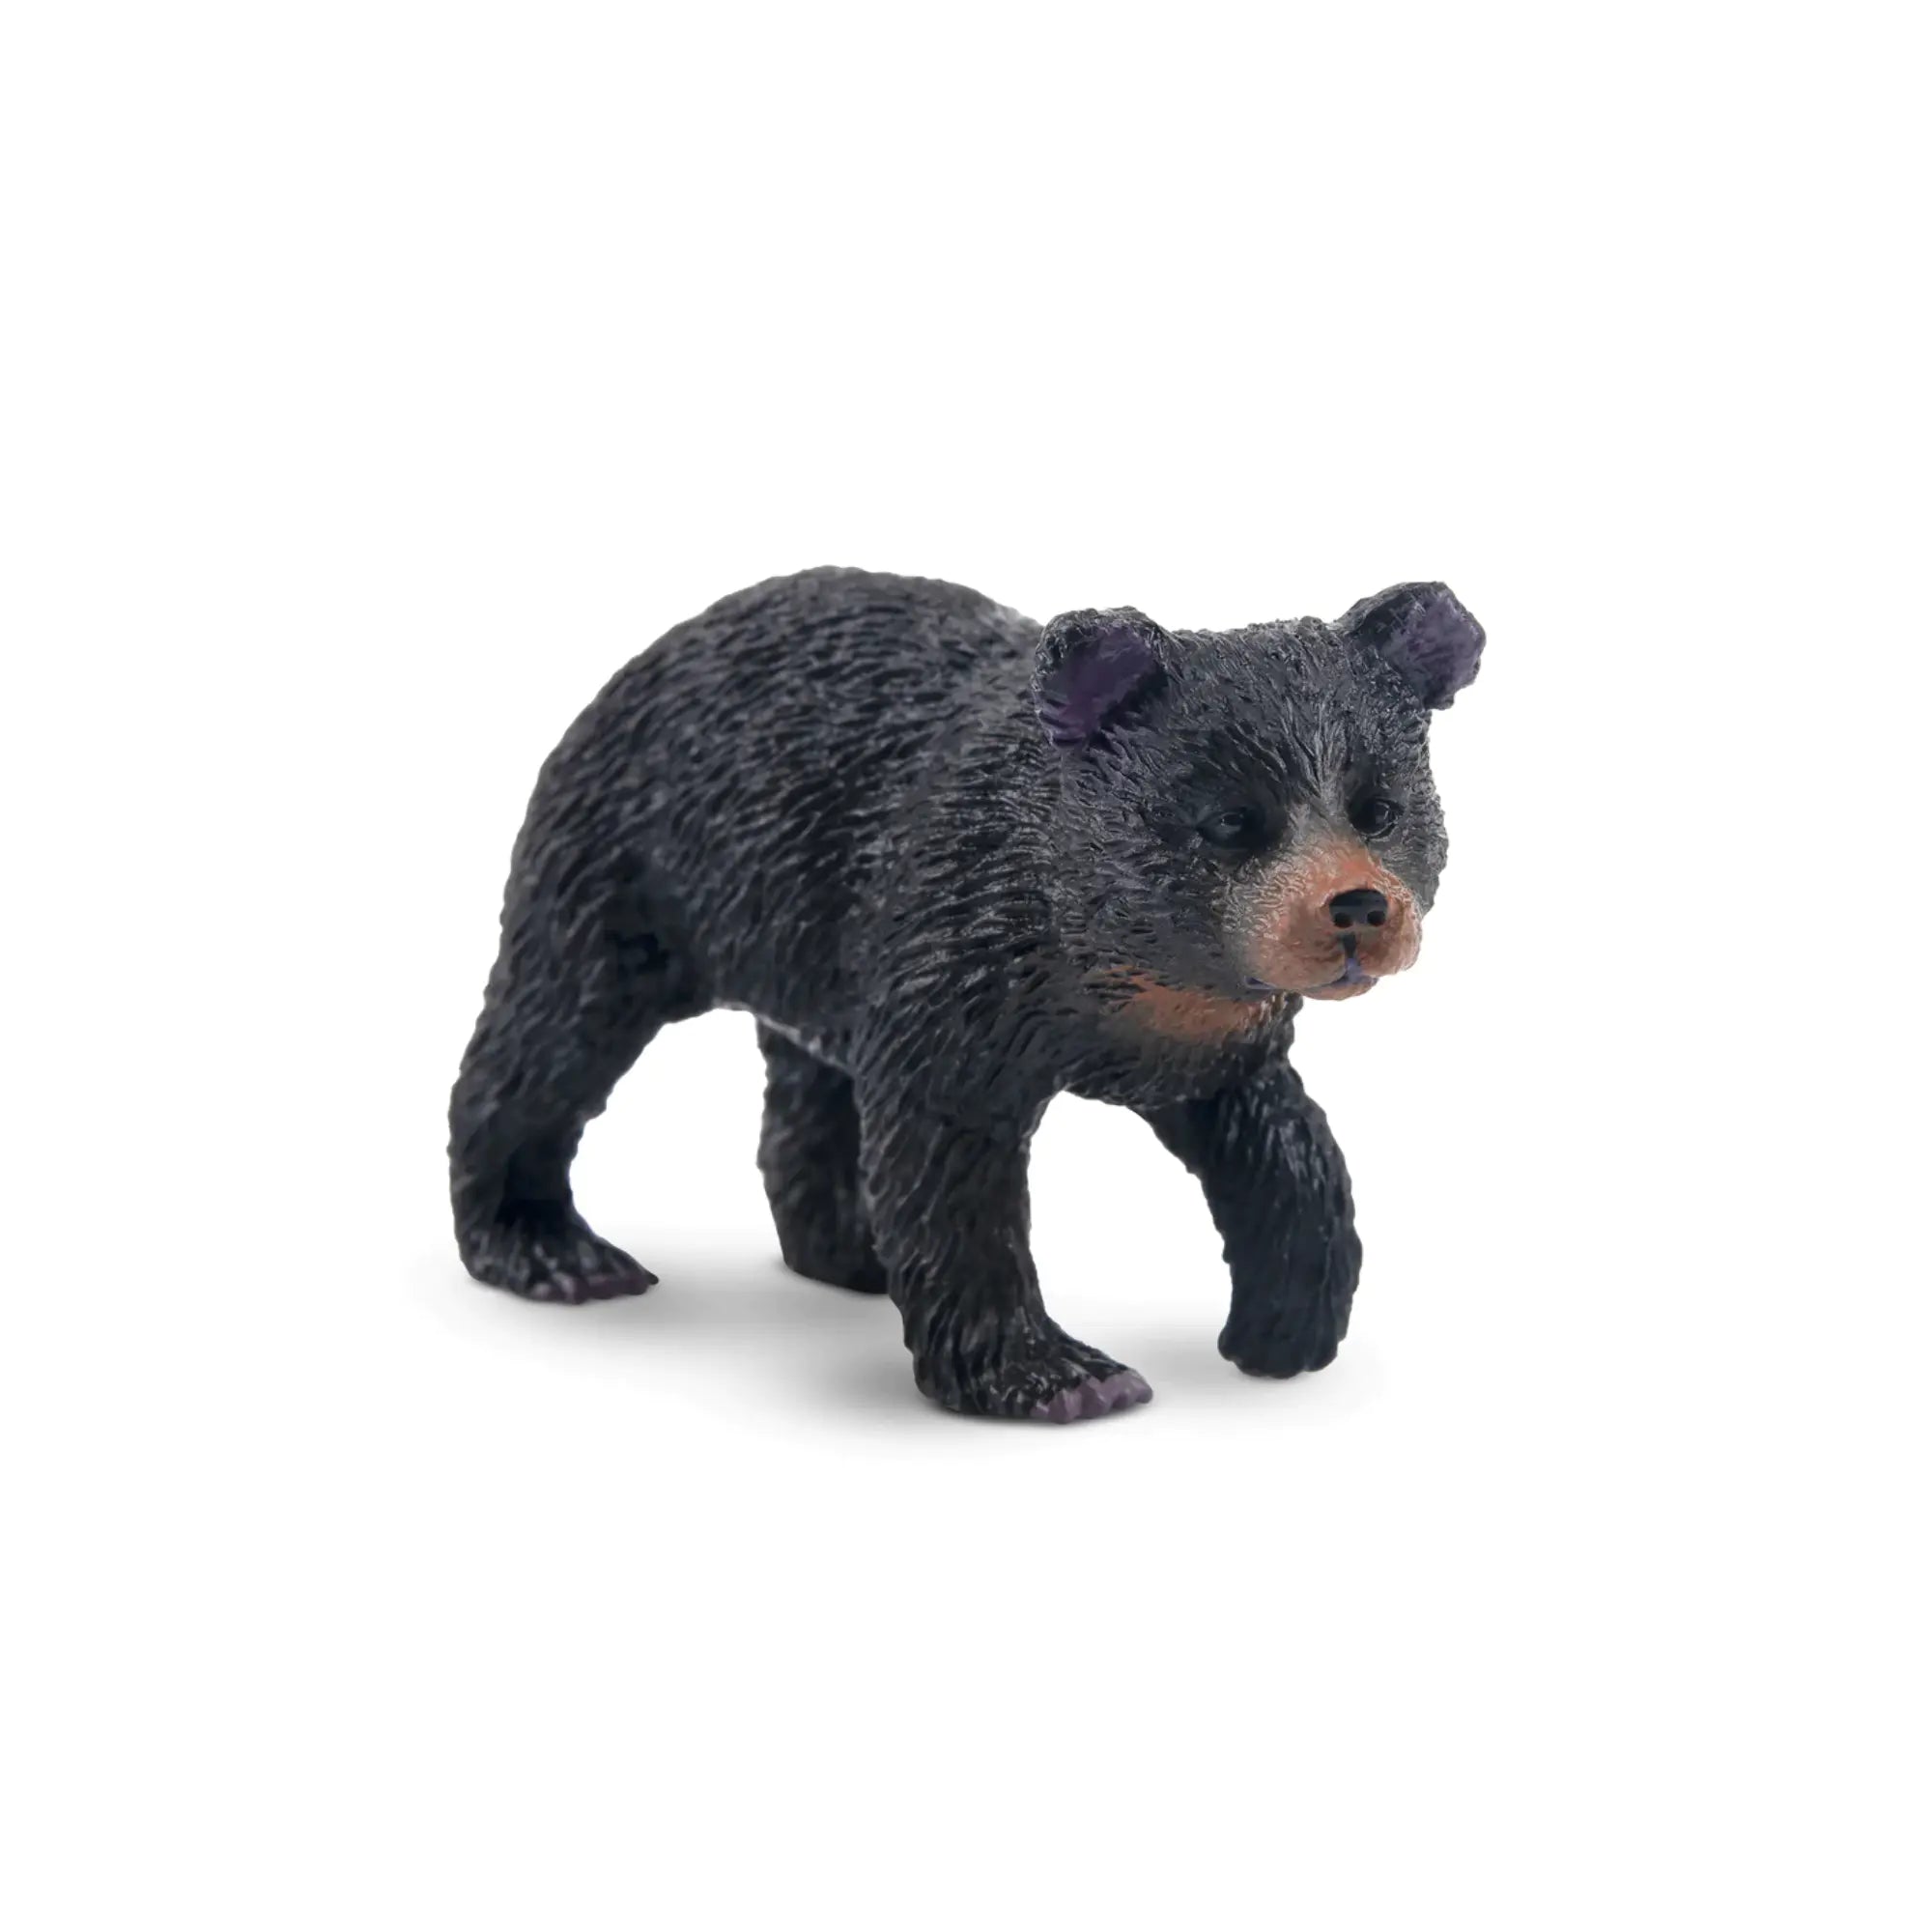 Toymany Black Bear Cub with Raised Paws Figurine Toy